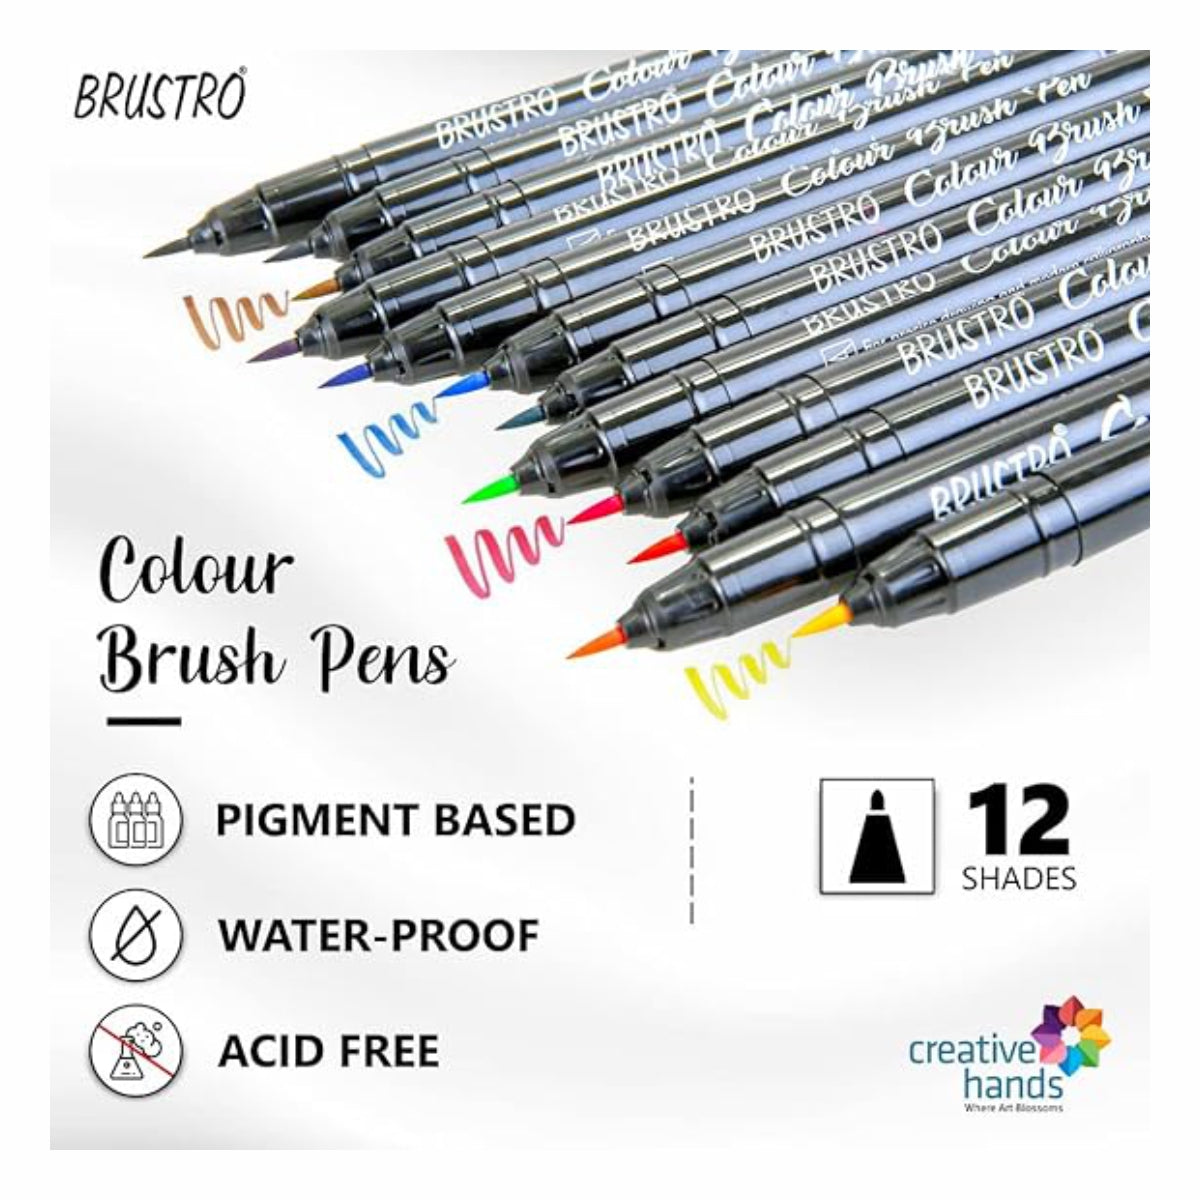 Brustro Brush Pens - 12 Shades